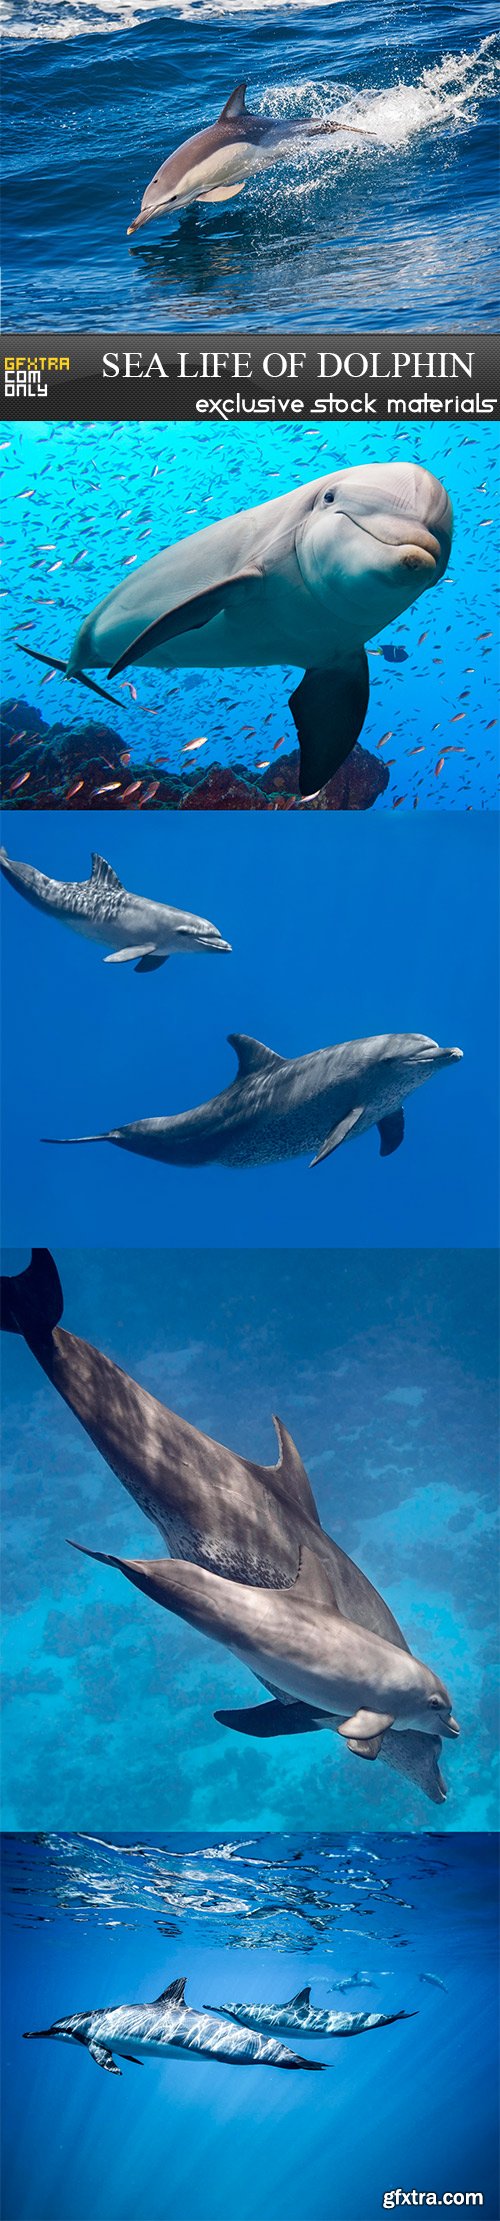 Sea life of dolphin - 5 UHQ JPEG